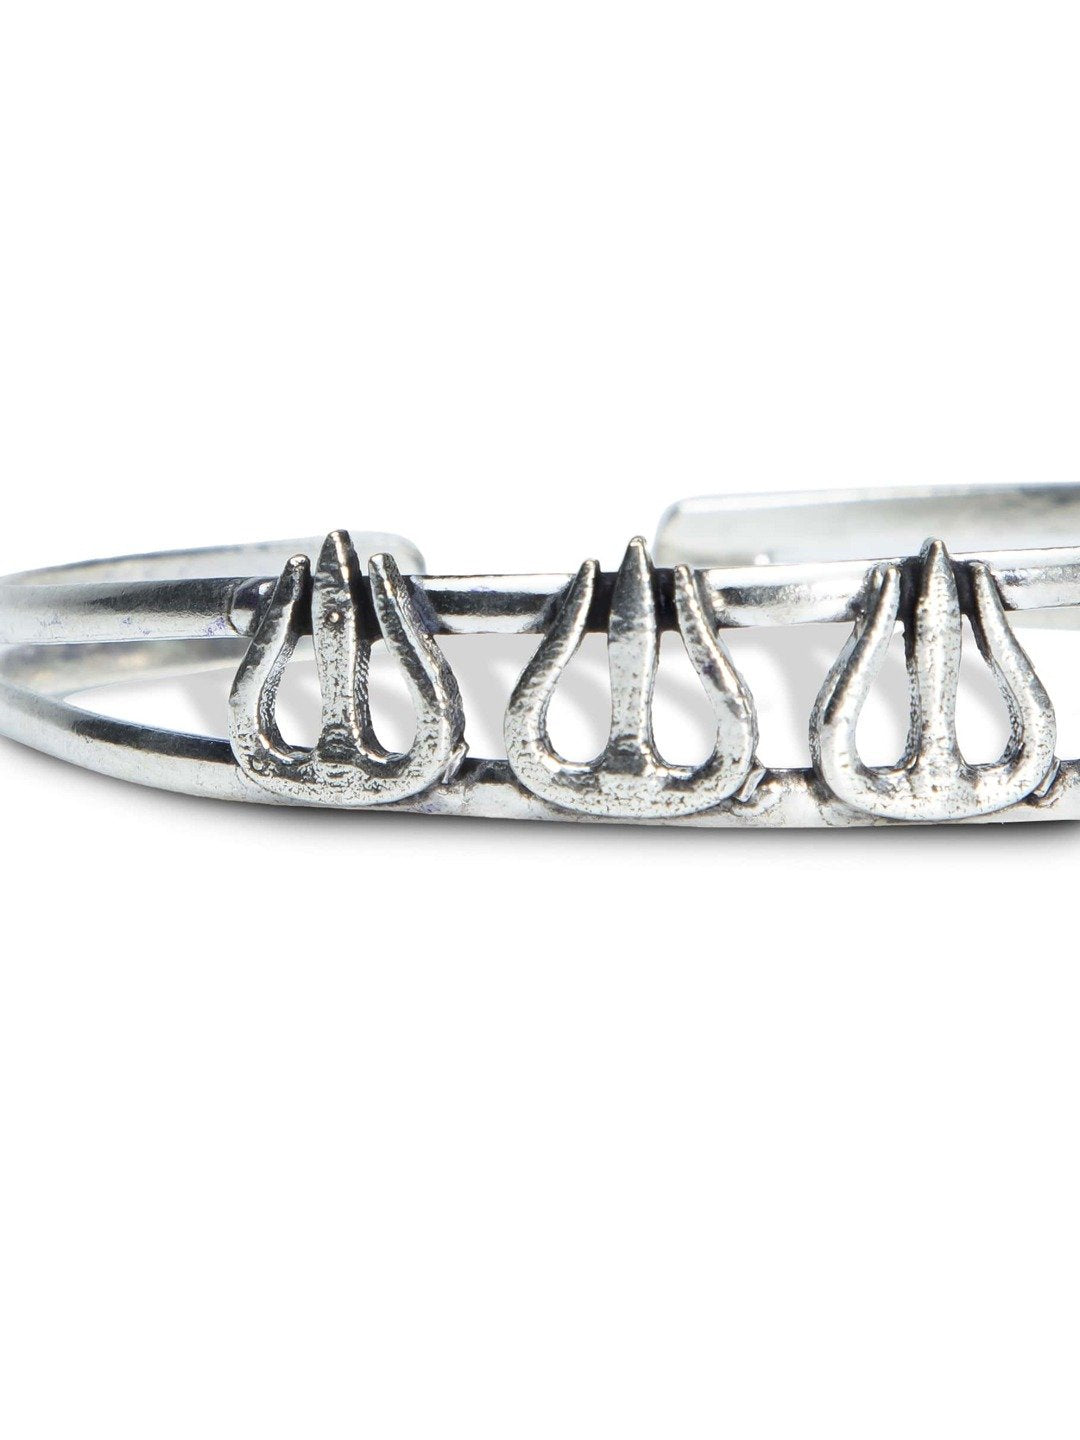 Women's Oxidized Silver-Plated Cuff Bracelet with Shiva pattern - Priyaasi